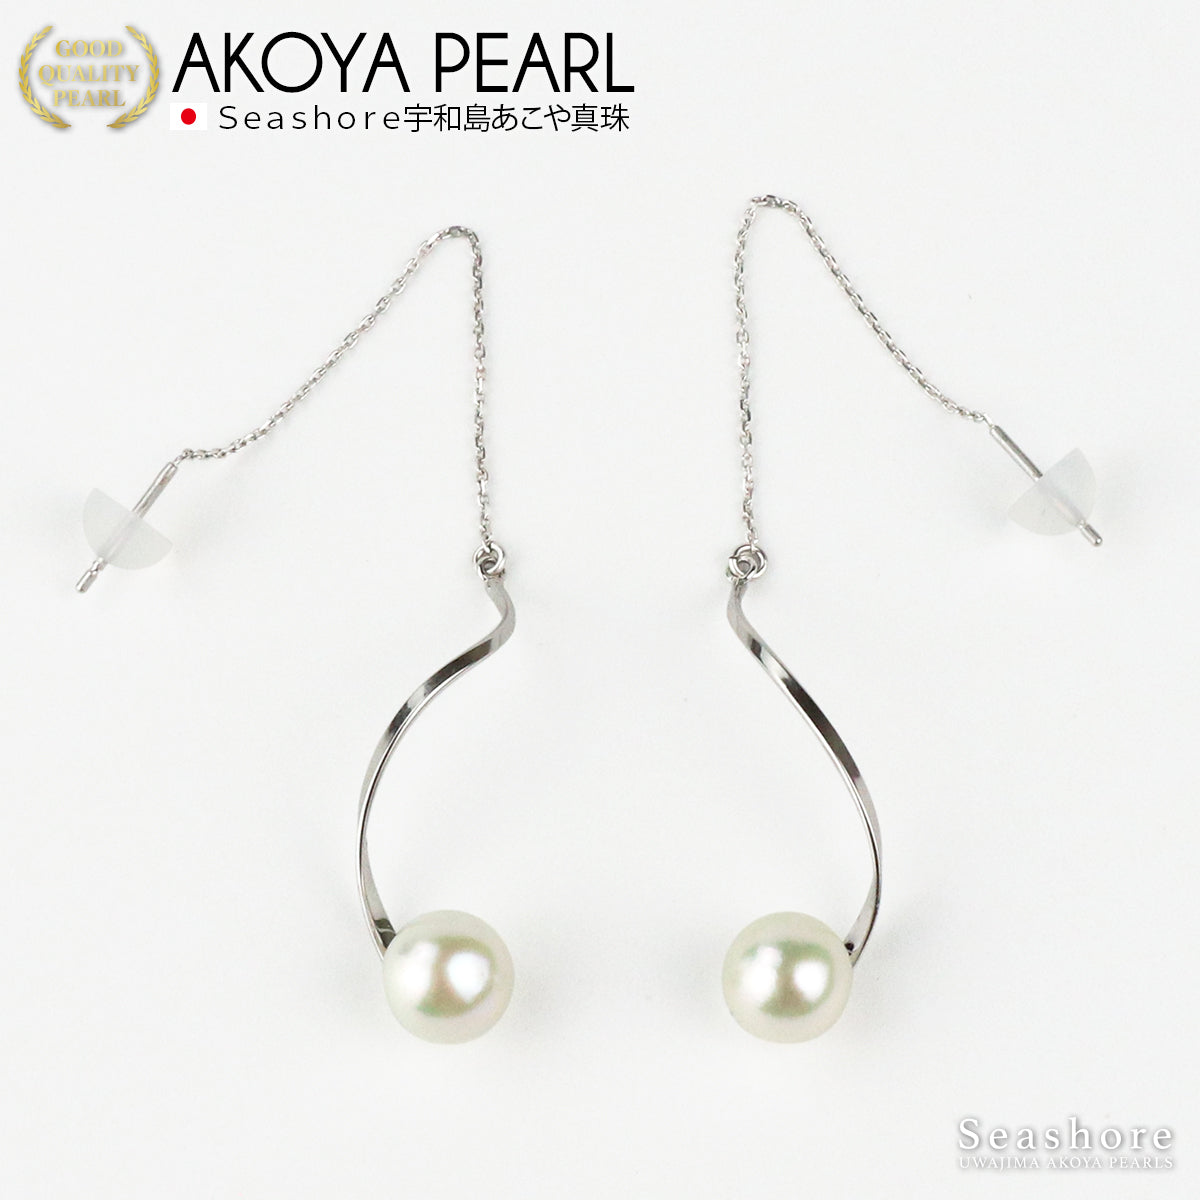 Akoya Pearl Earrings Single Dangle Akoya Twist American Earrings Women's Large Beads [8.0-8.5mm] Natural White Untoned Color SV925